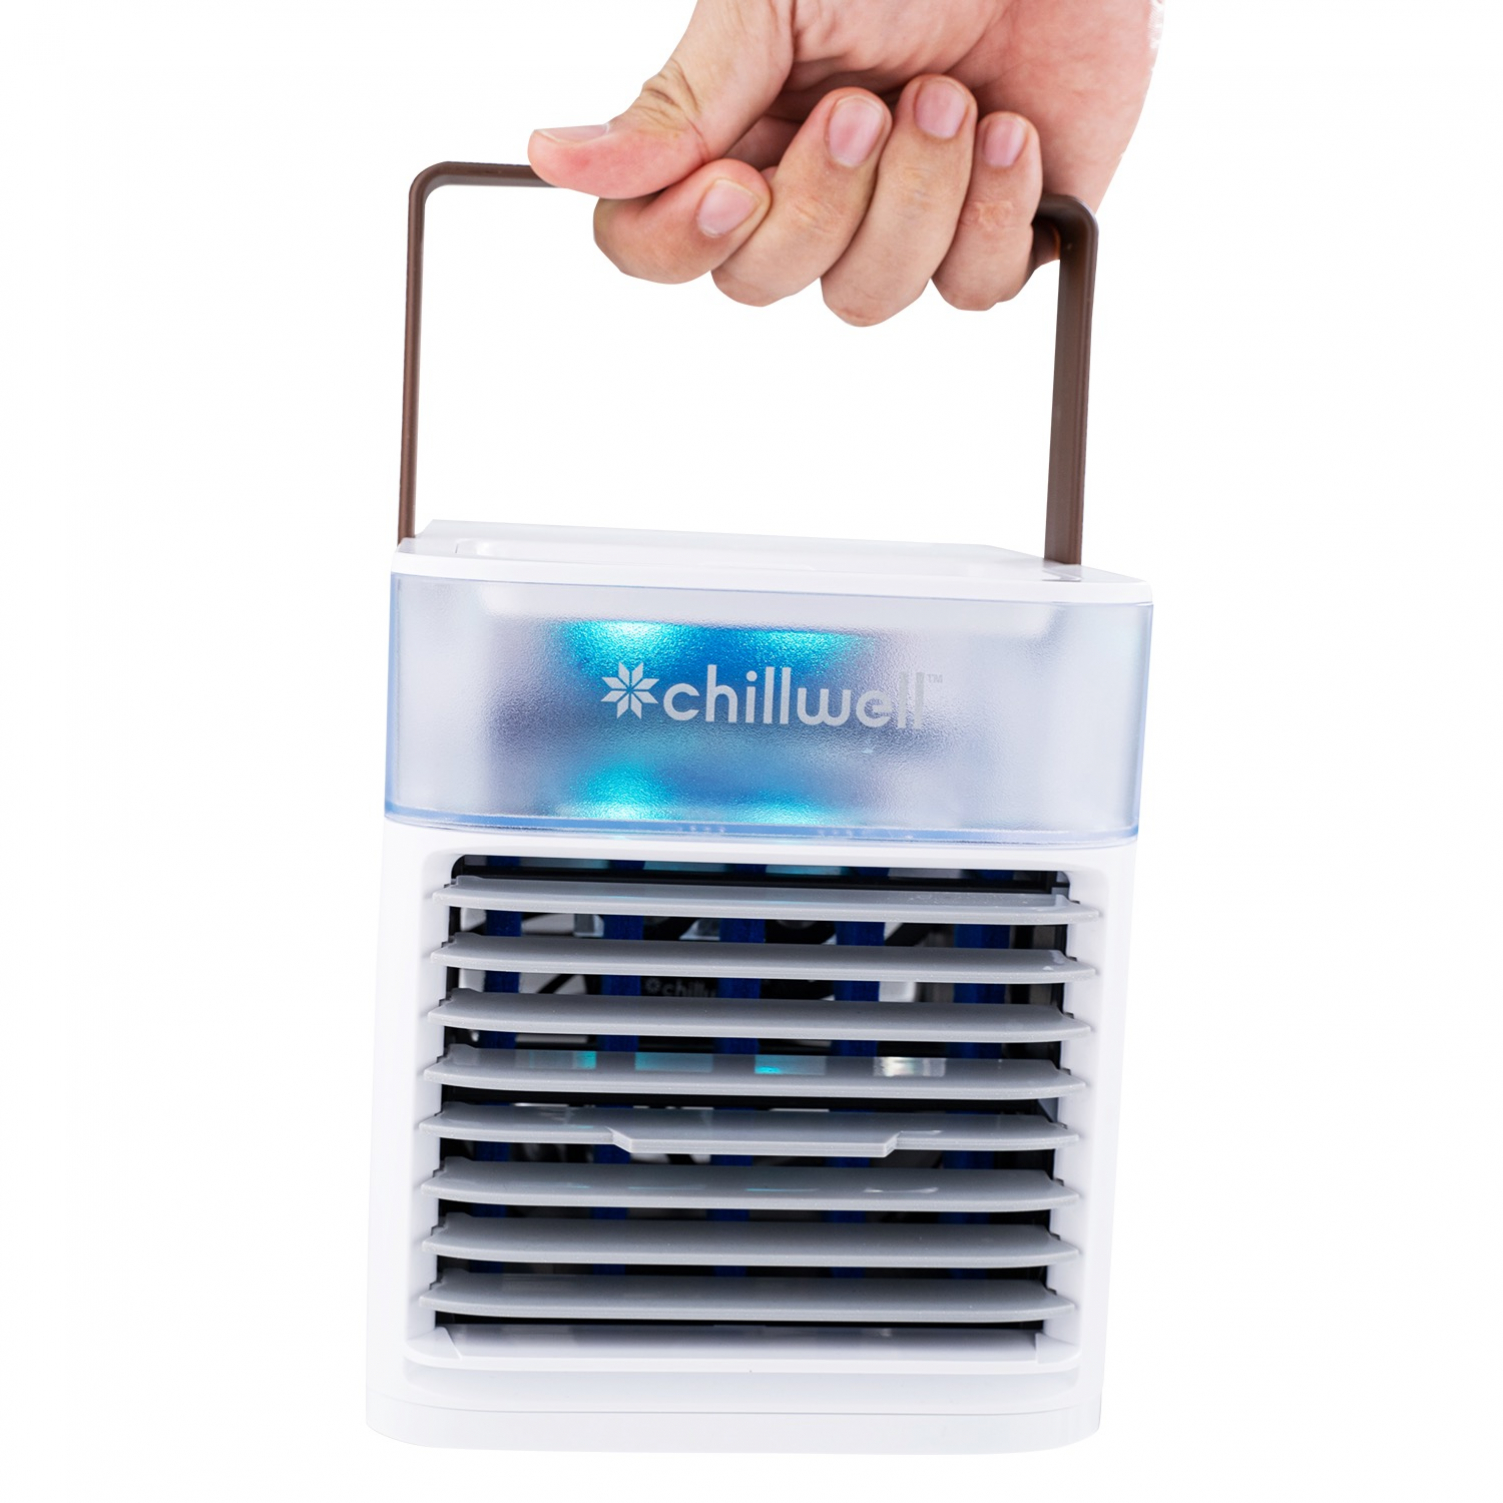 Chillwell AC Mini Portable Ac